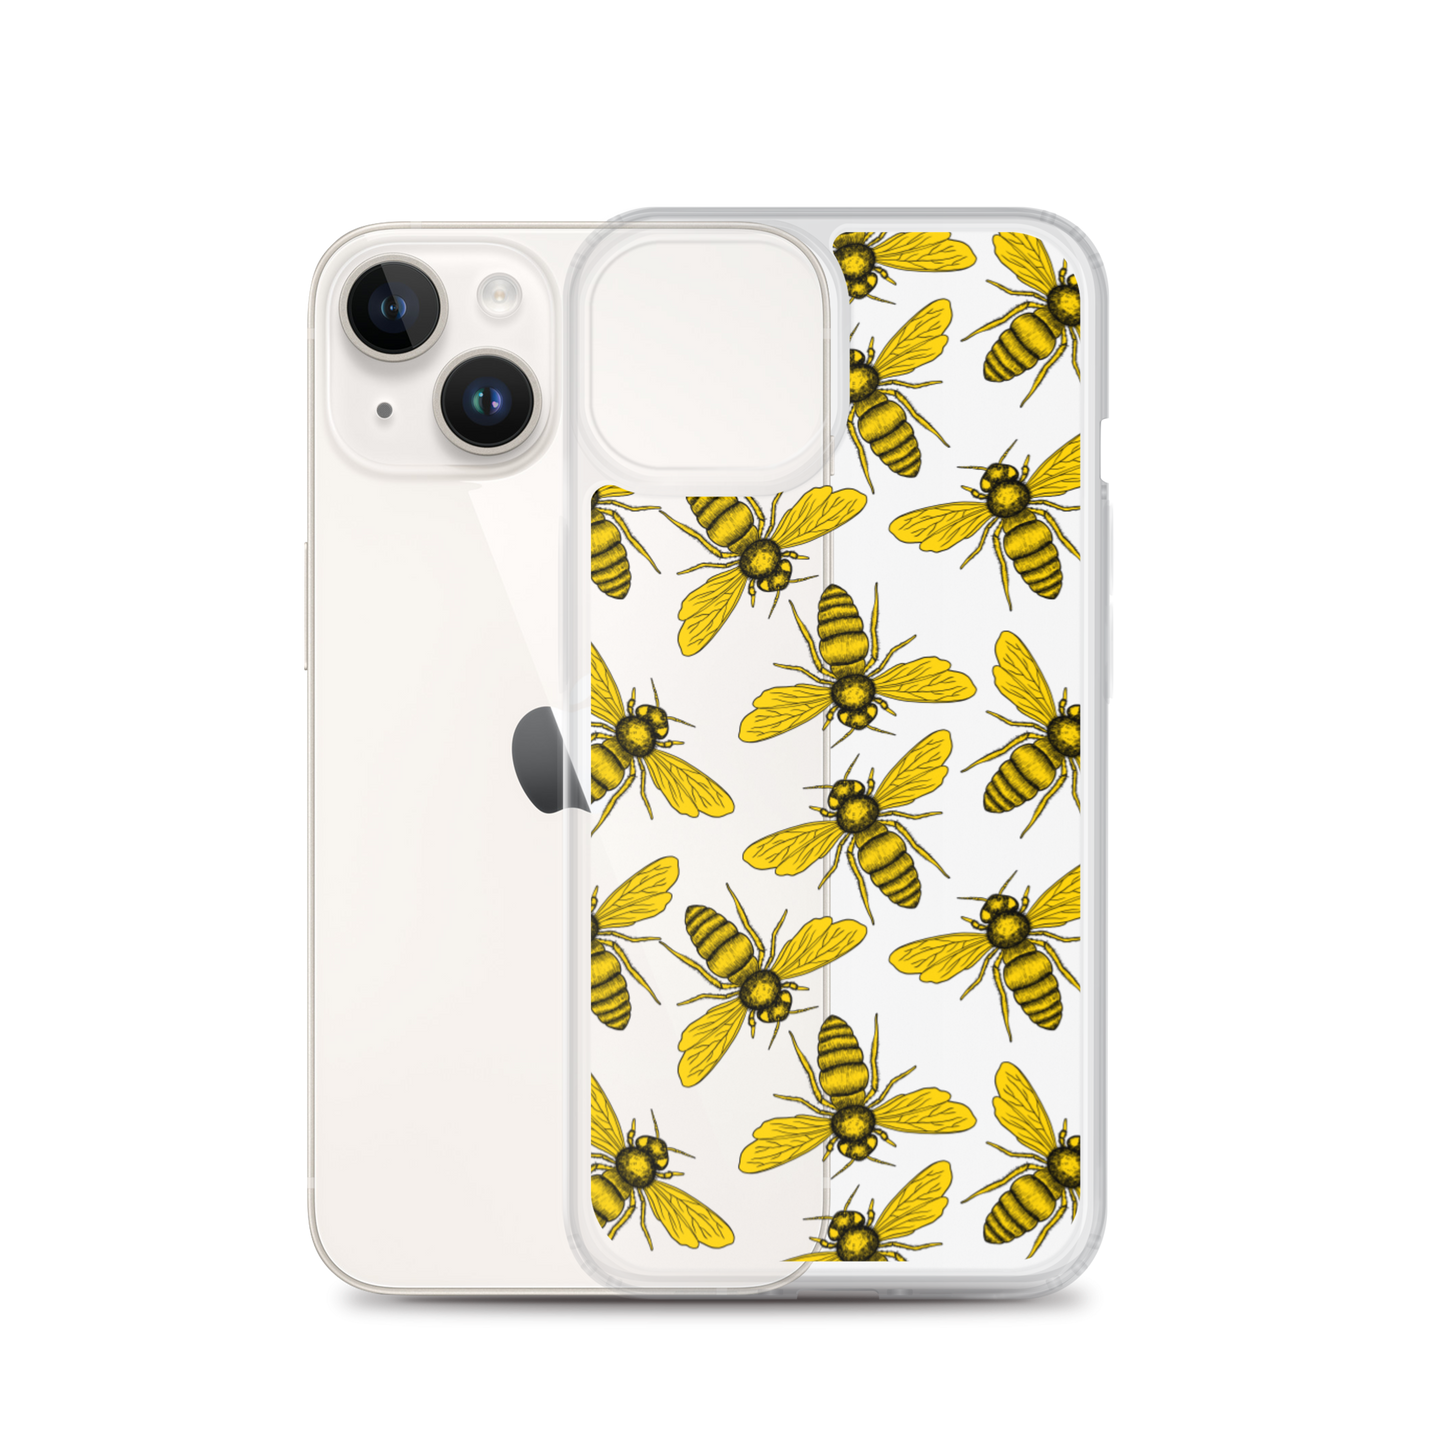 Honey Bees iPhone Case